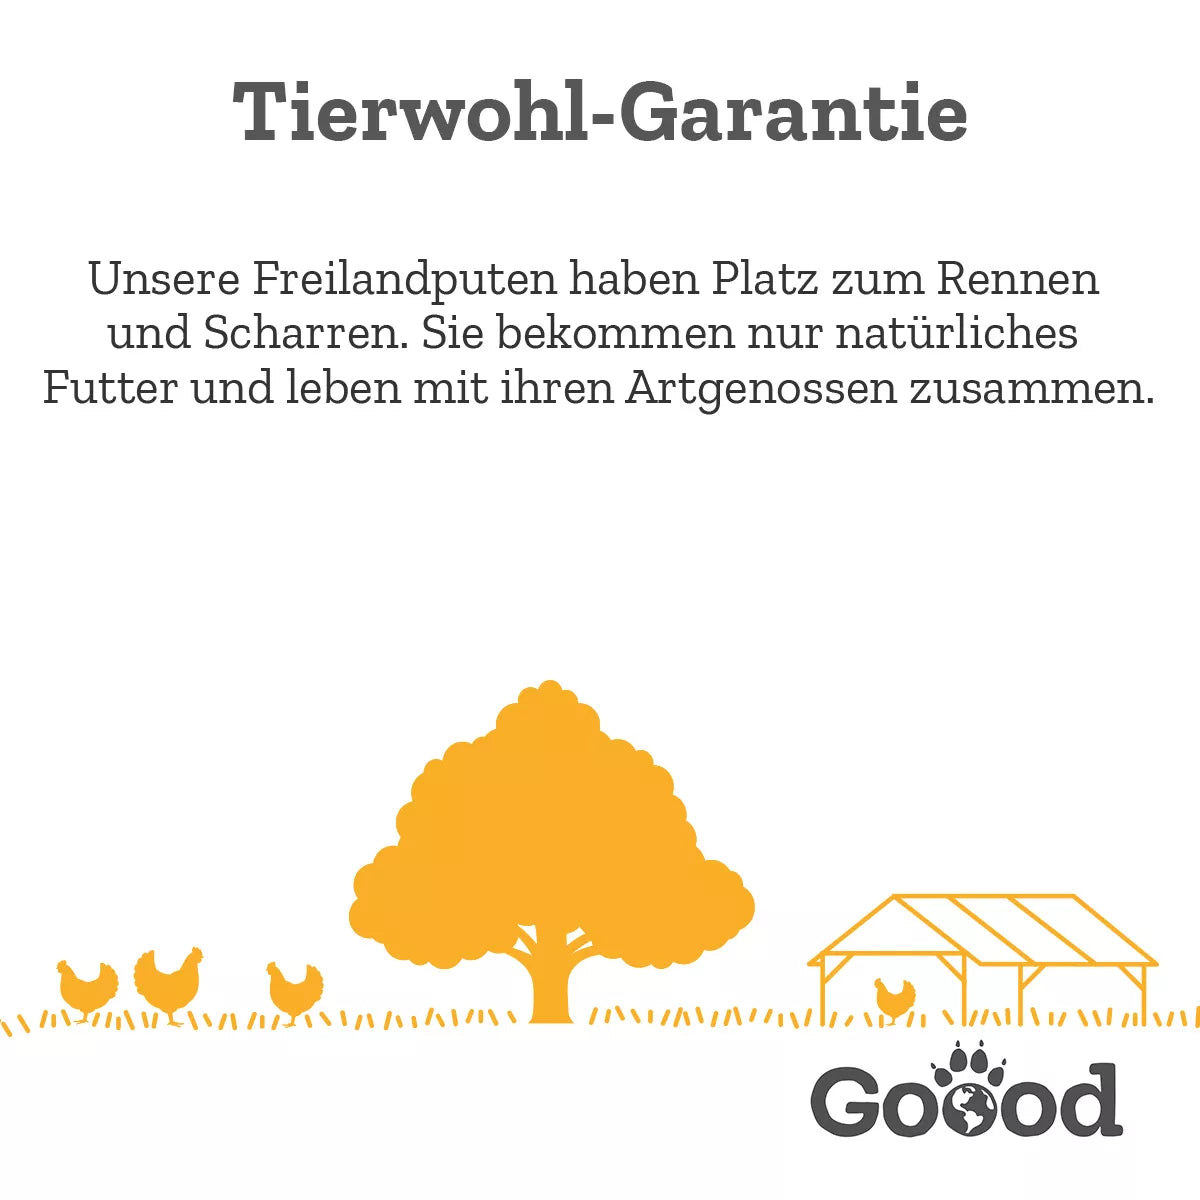 GOOOD Senior - Freilandpute & Nachhaltige Forelle, 400g Dose